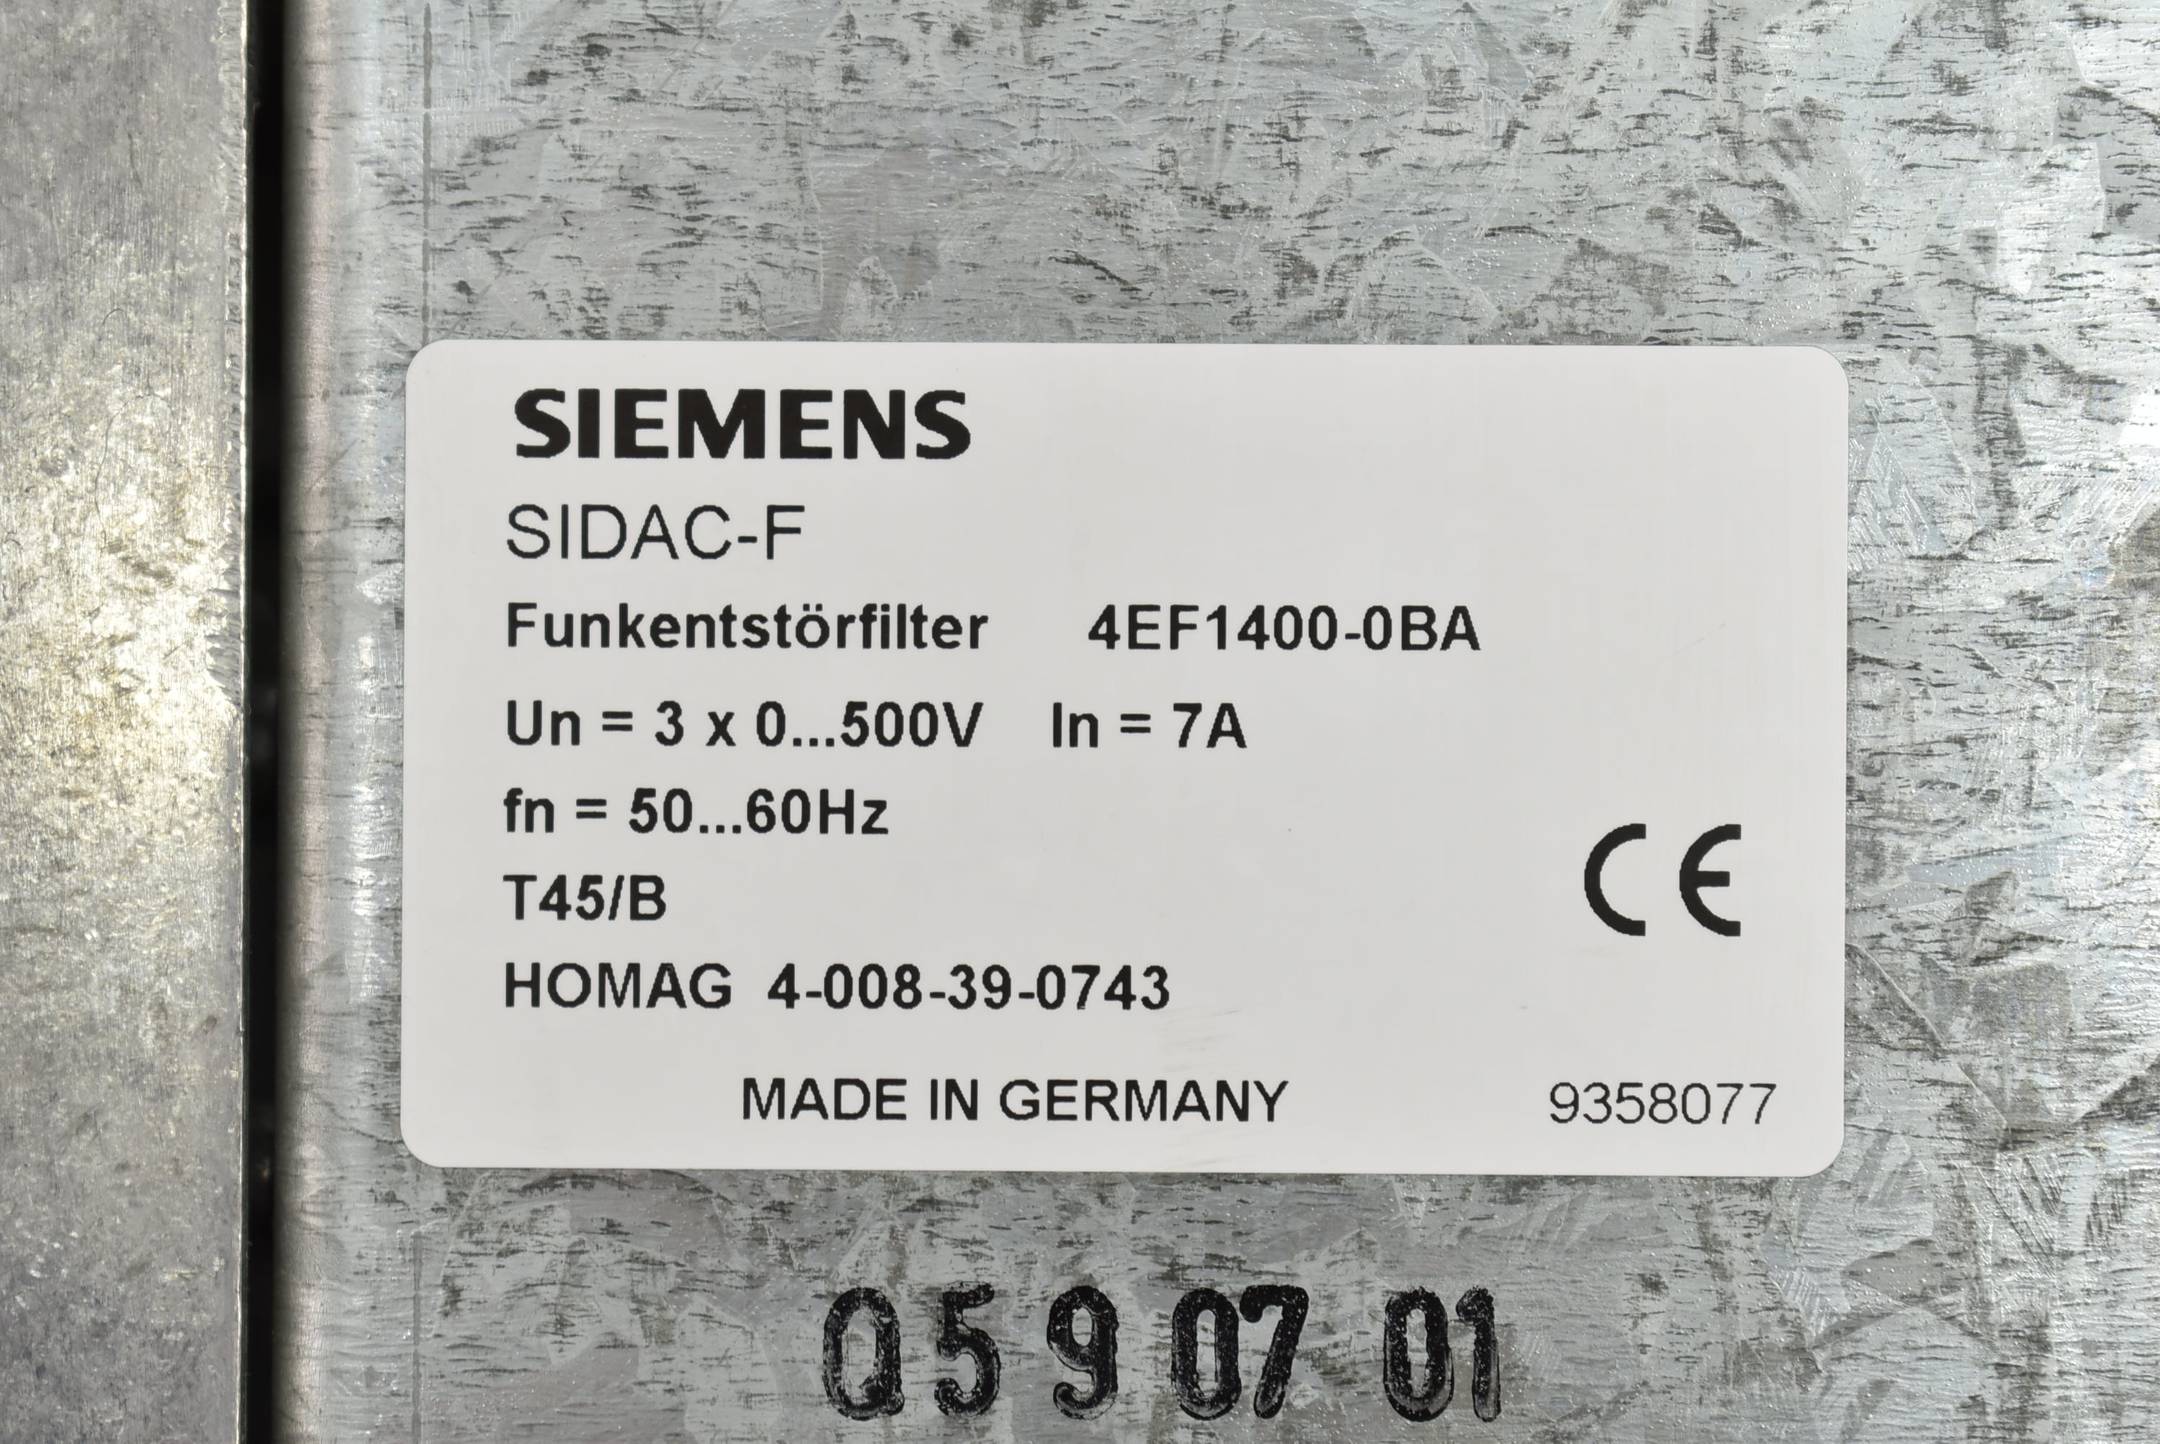 KEB Combivert 05.F4.C1D-4A01 E167544 V1.4 inkl. Siemens Sidac-F 4EF1400-0BA